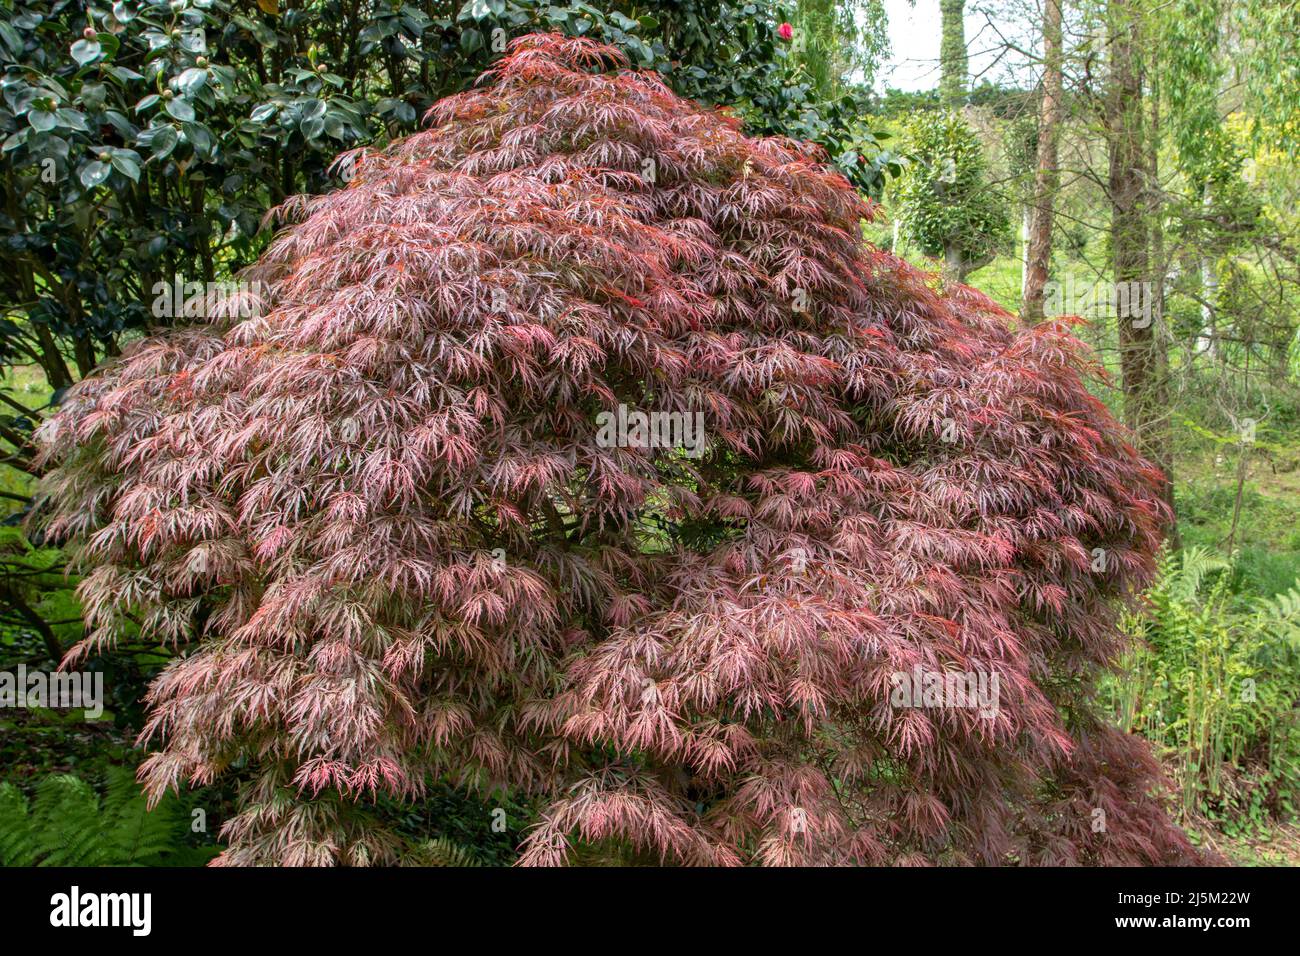 Acer palmatum dissectum atropurpureum,Japanese maple,palmate maple or smooth Japanese maple decorative tree with purple leaves in the ornamental garde Stock Photo